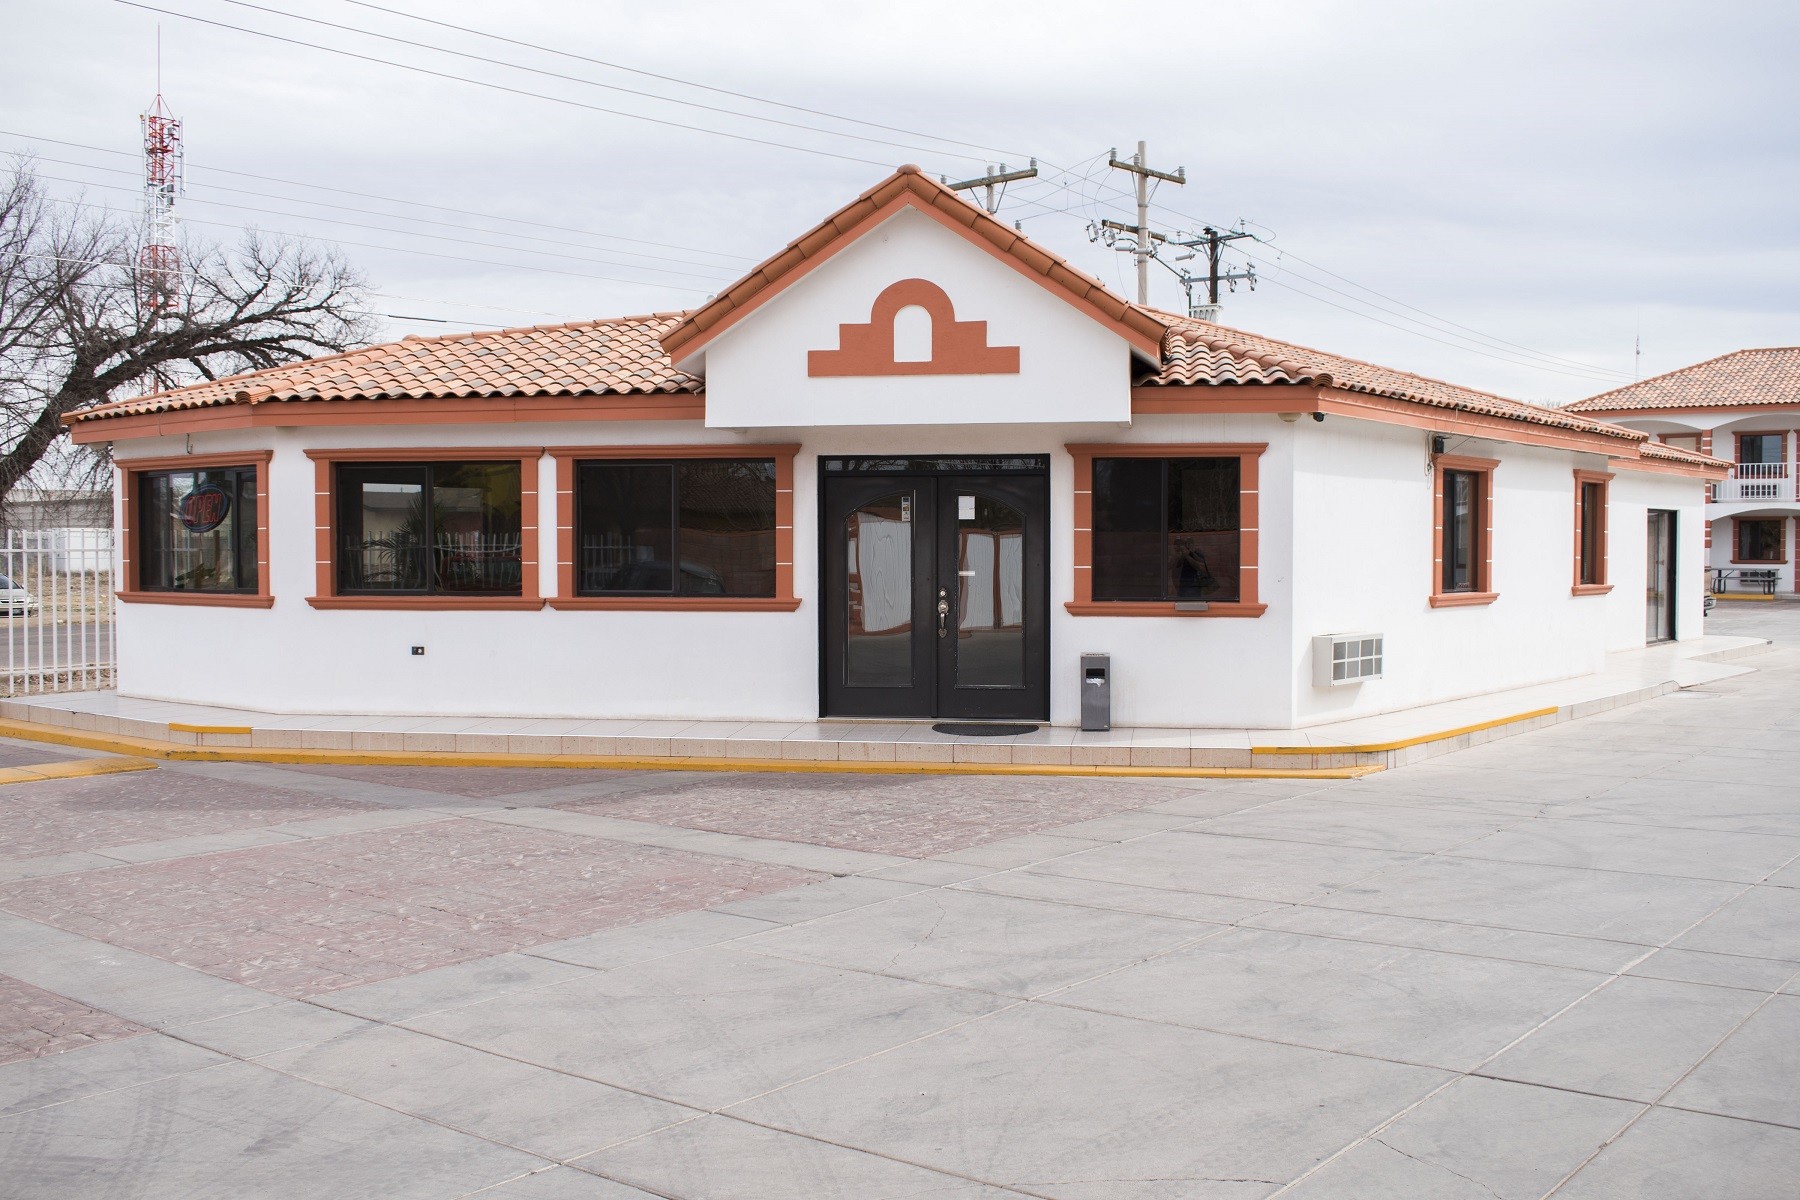 Dublan Inn, Nuevo Casas Grandes